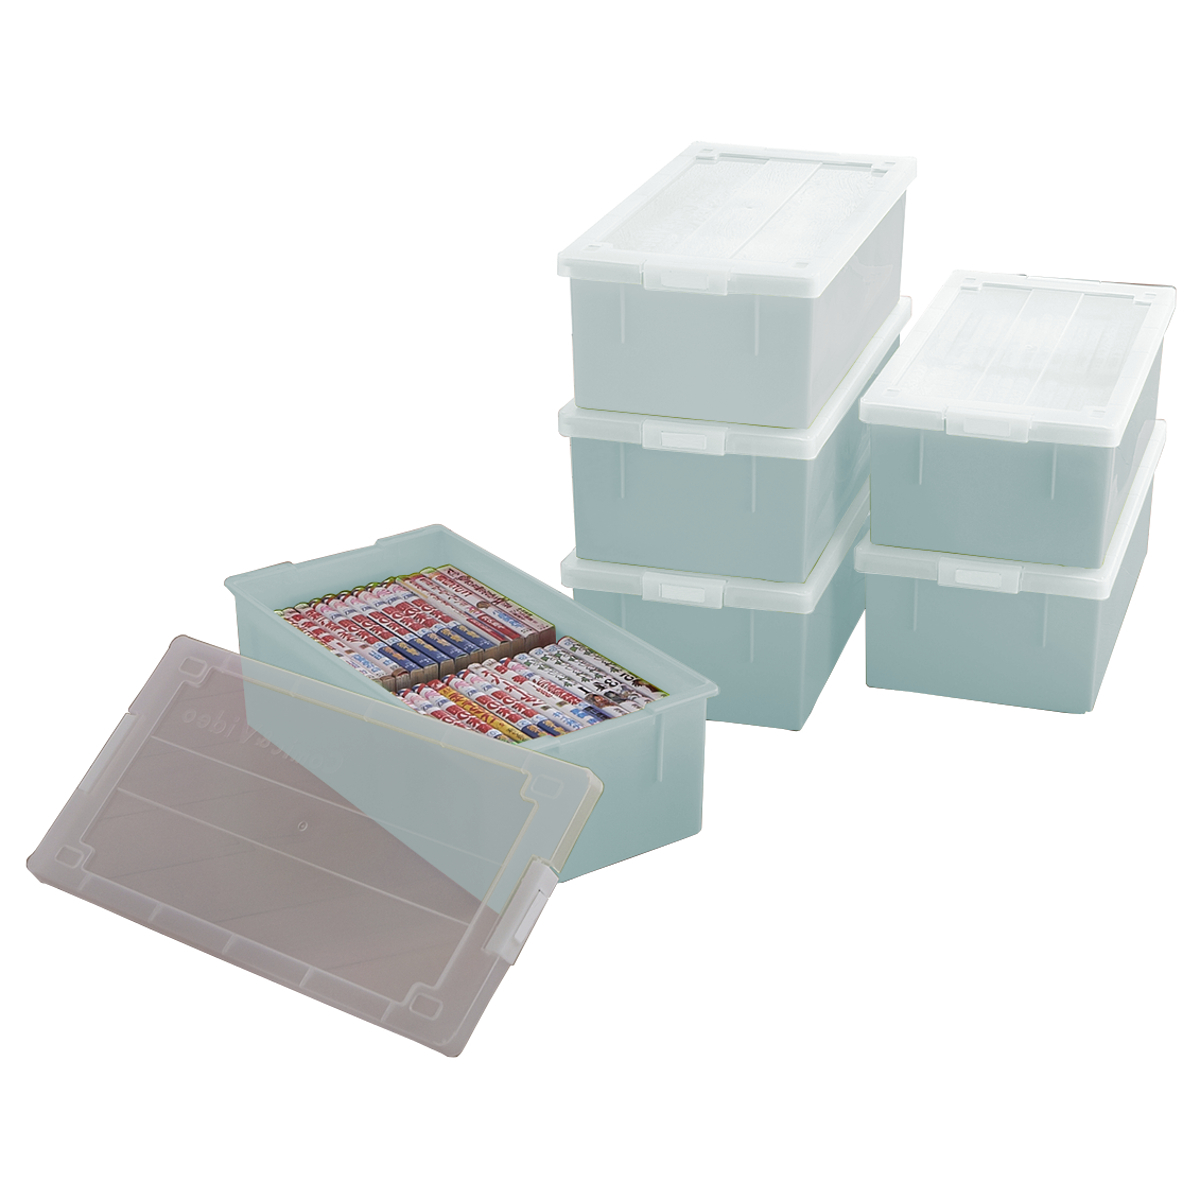 CDケース DVDケース  ブルーレイケース 収納ボックス バックル式 フタ付き 収納ケース プラスチック カラーボックス 仕切り板 おしゃれ 可愛い アイスブルー 同色 6個組 完成品 小物収納 日本製 